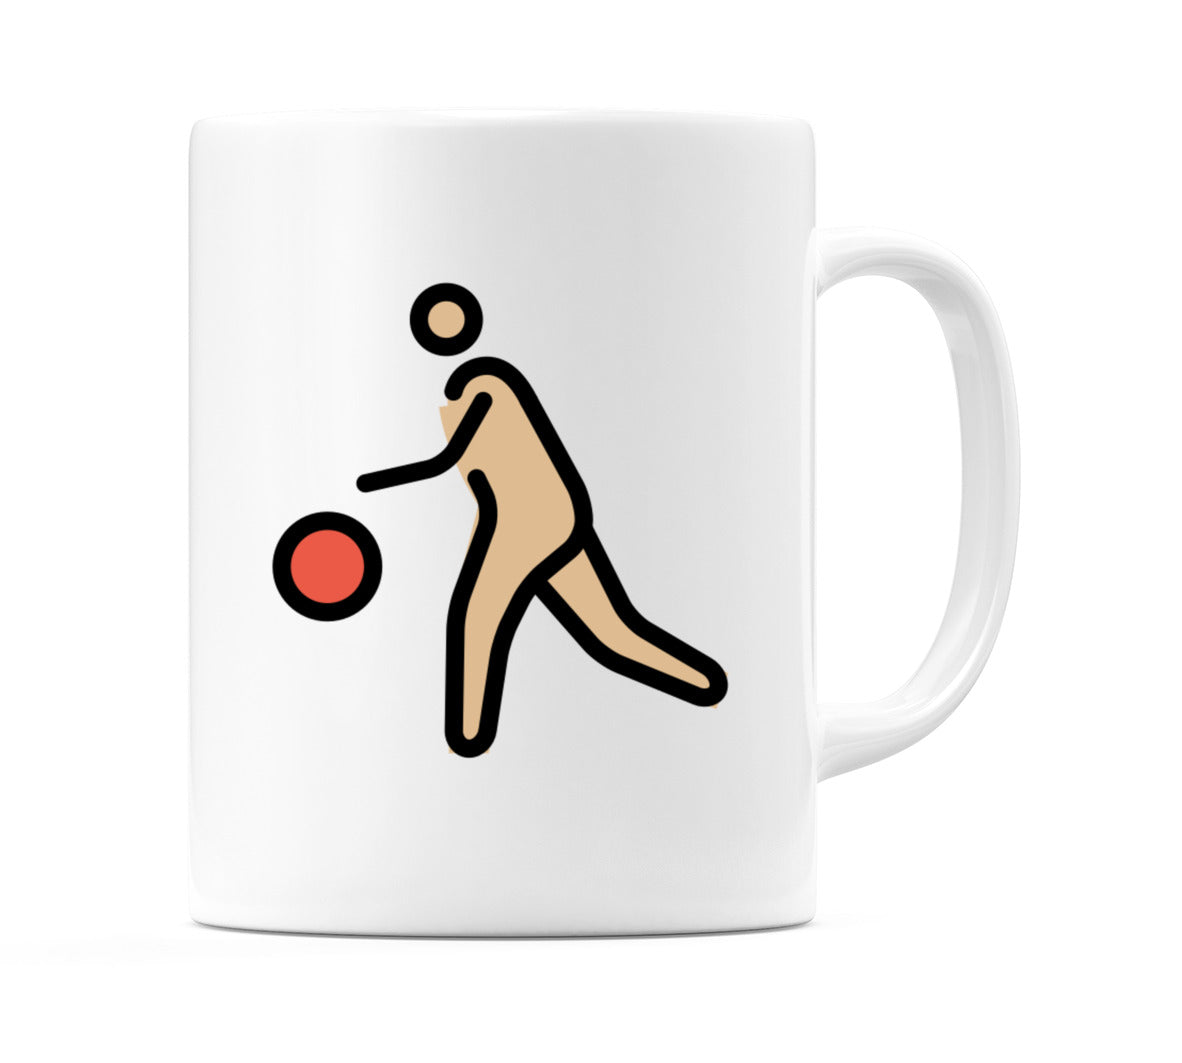 Person Bouncing Ball: Medium-Light Skin Tone Emoji Mug